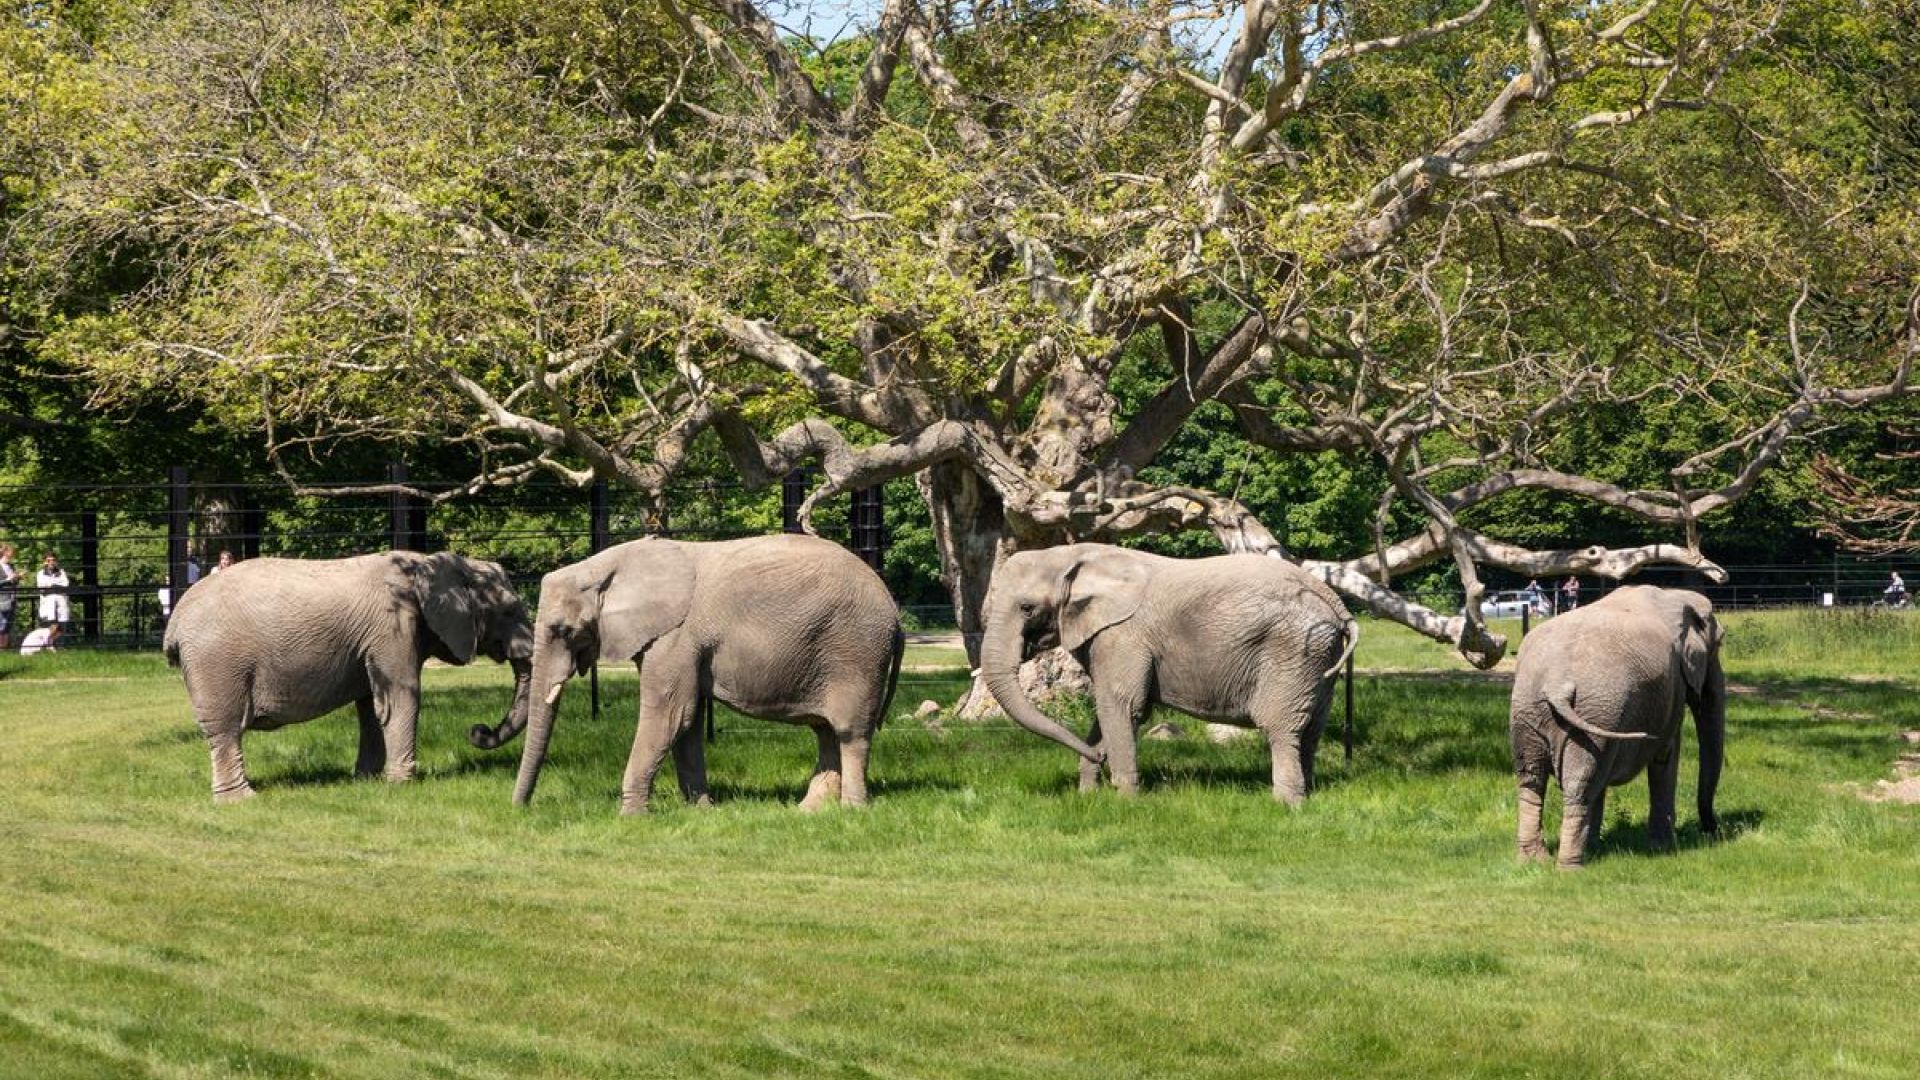 Cirkuselefanterne nyder deres otium